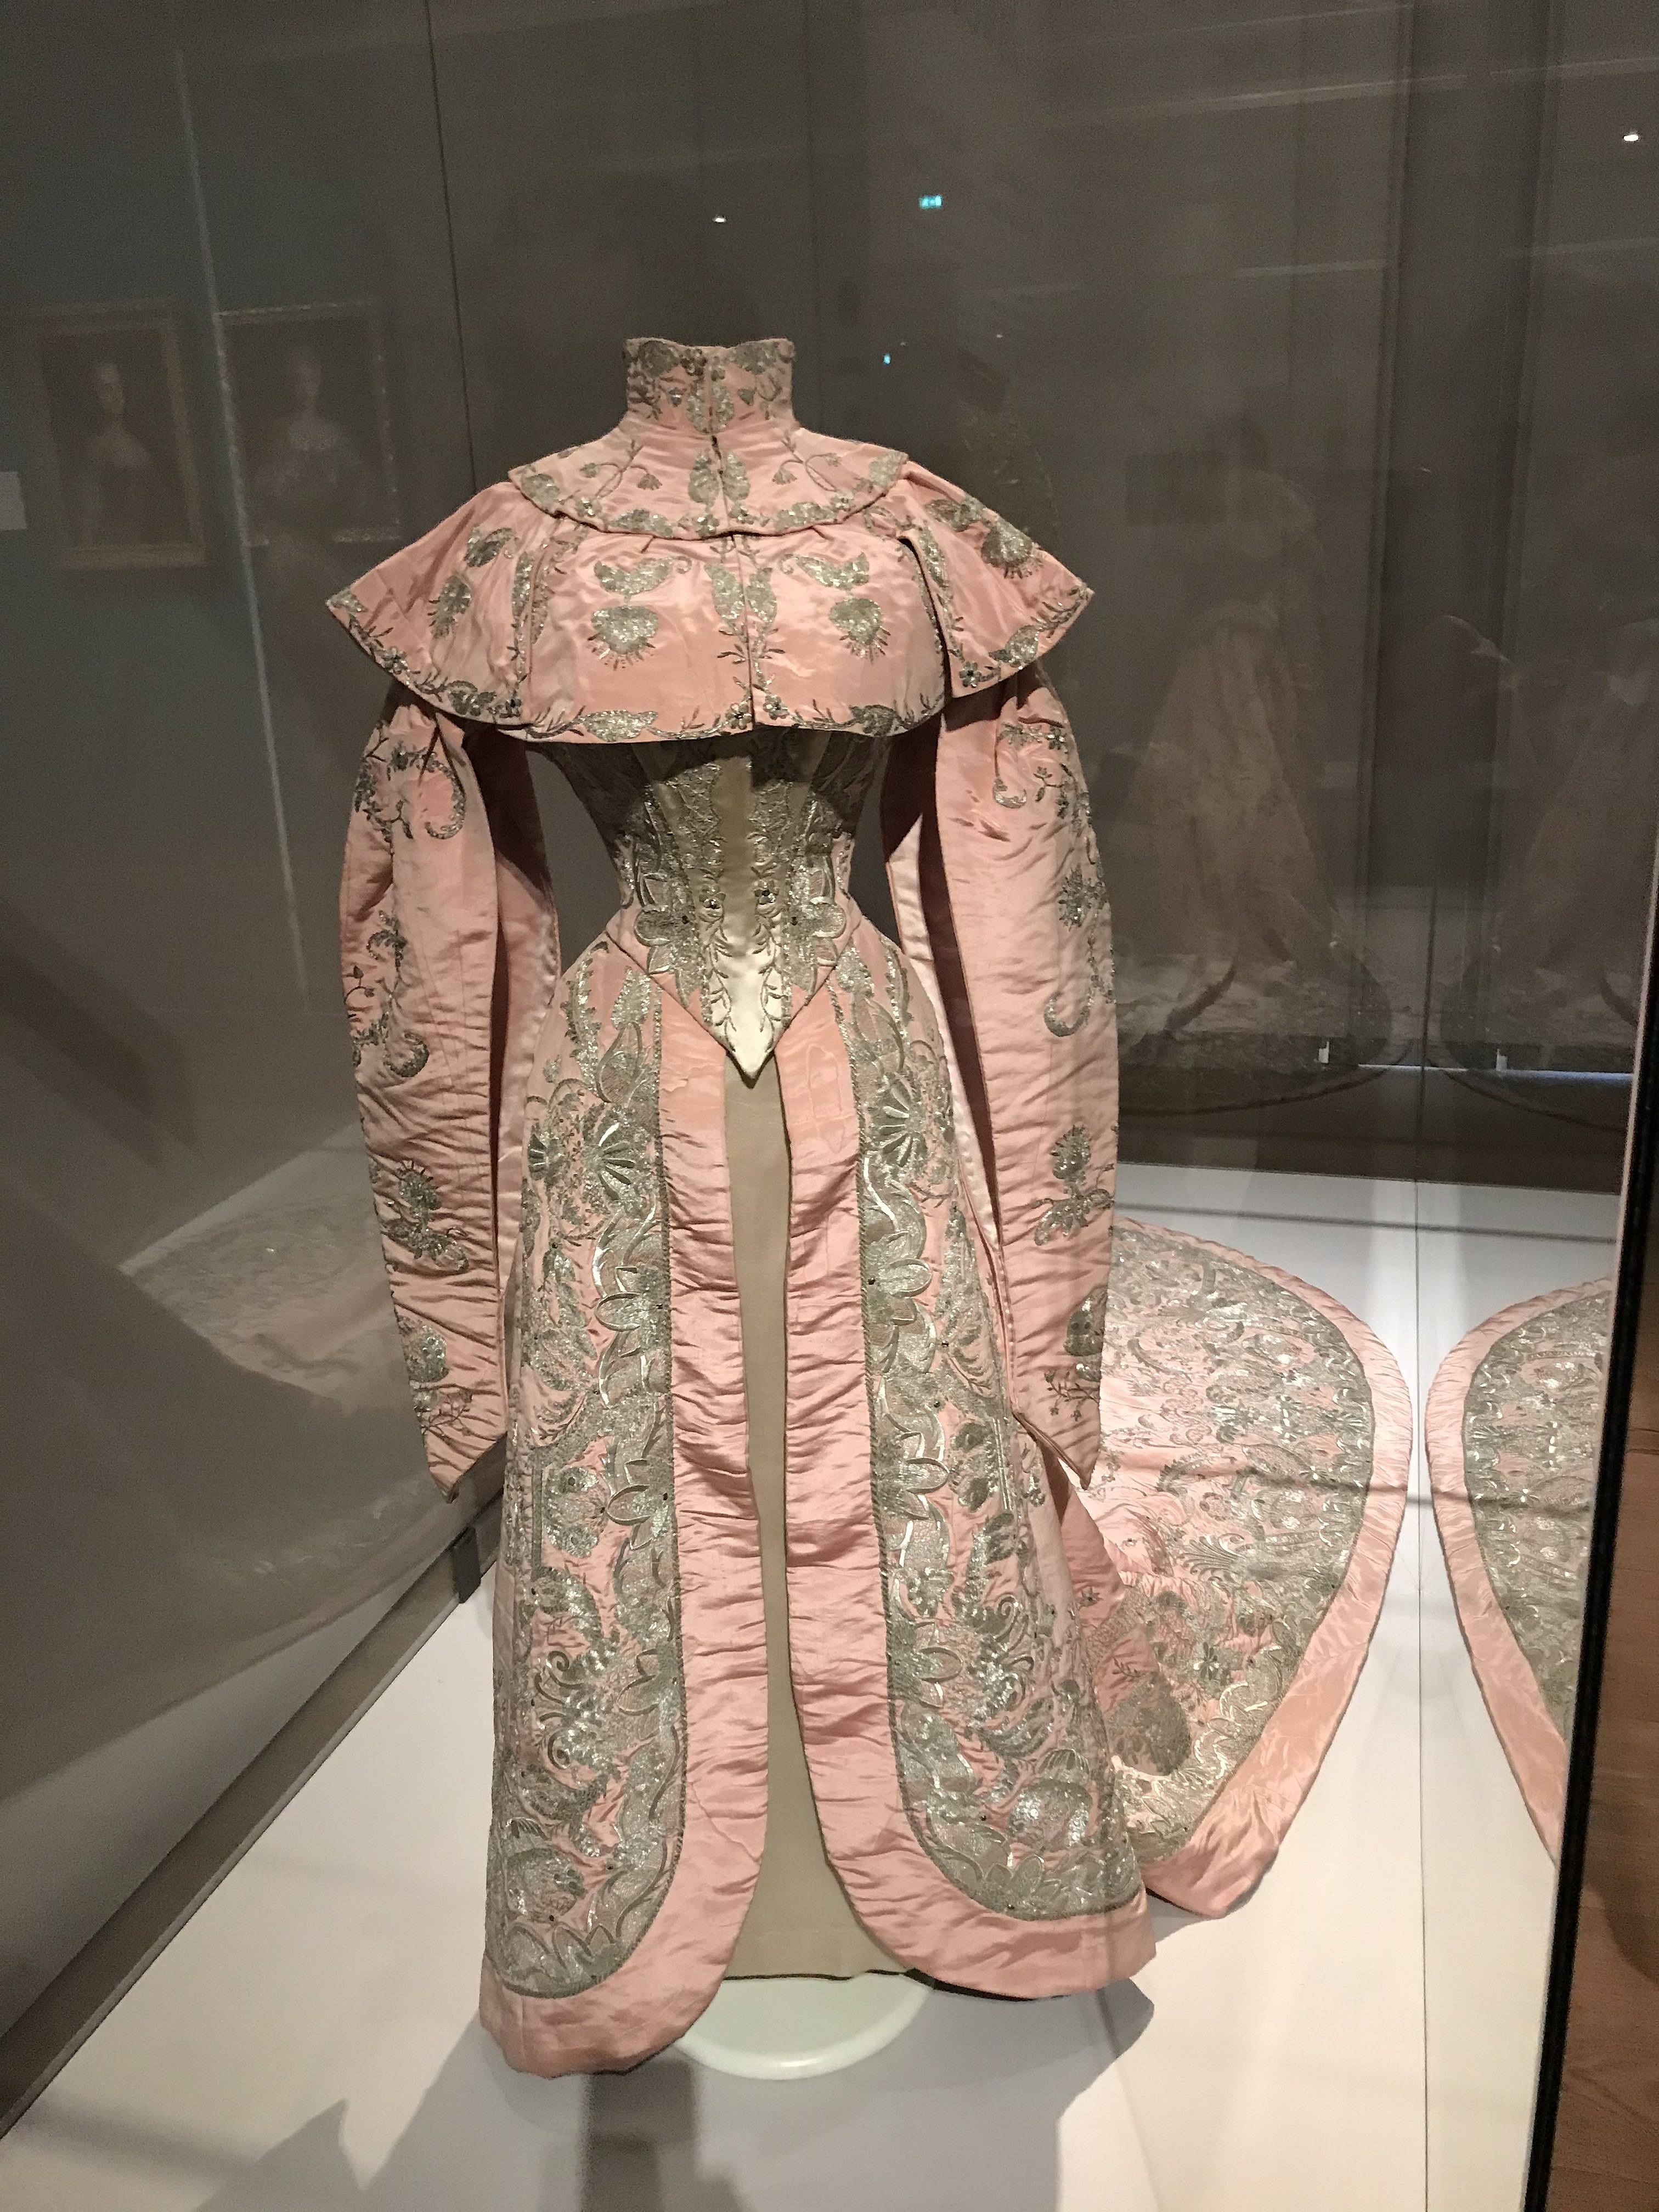 File:Ceremonial Court Dress worn by Princess Zinaida Yusupova.jpg -  Wikipedia